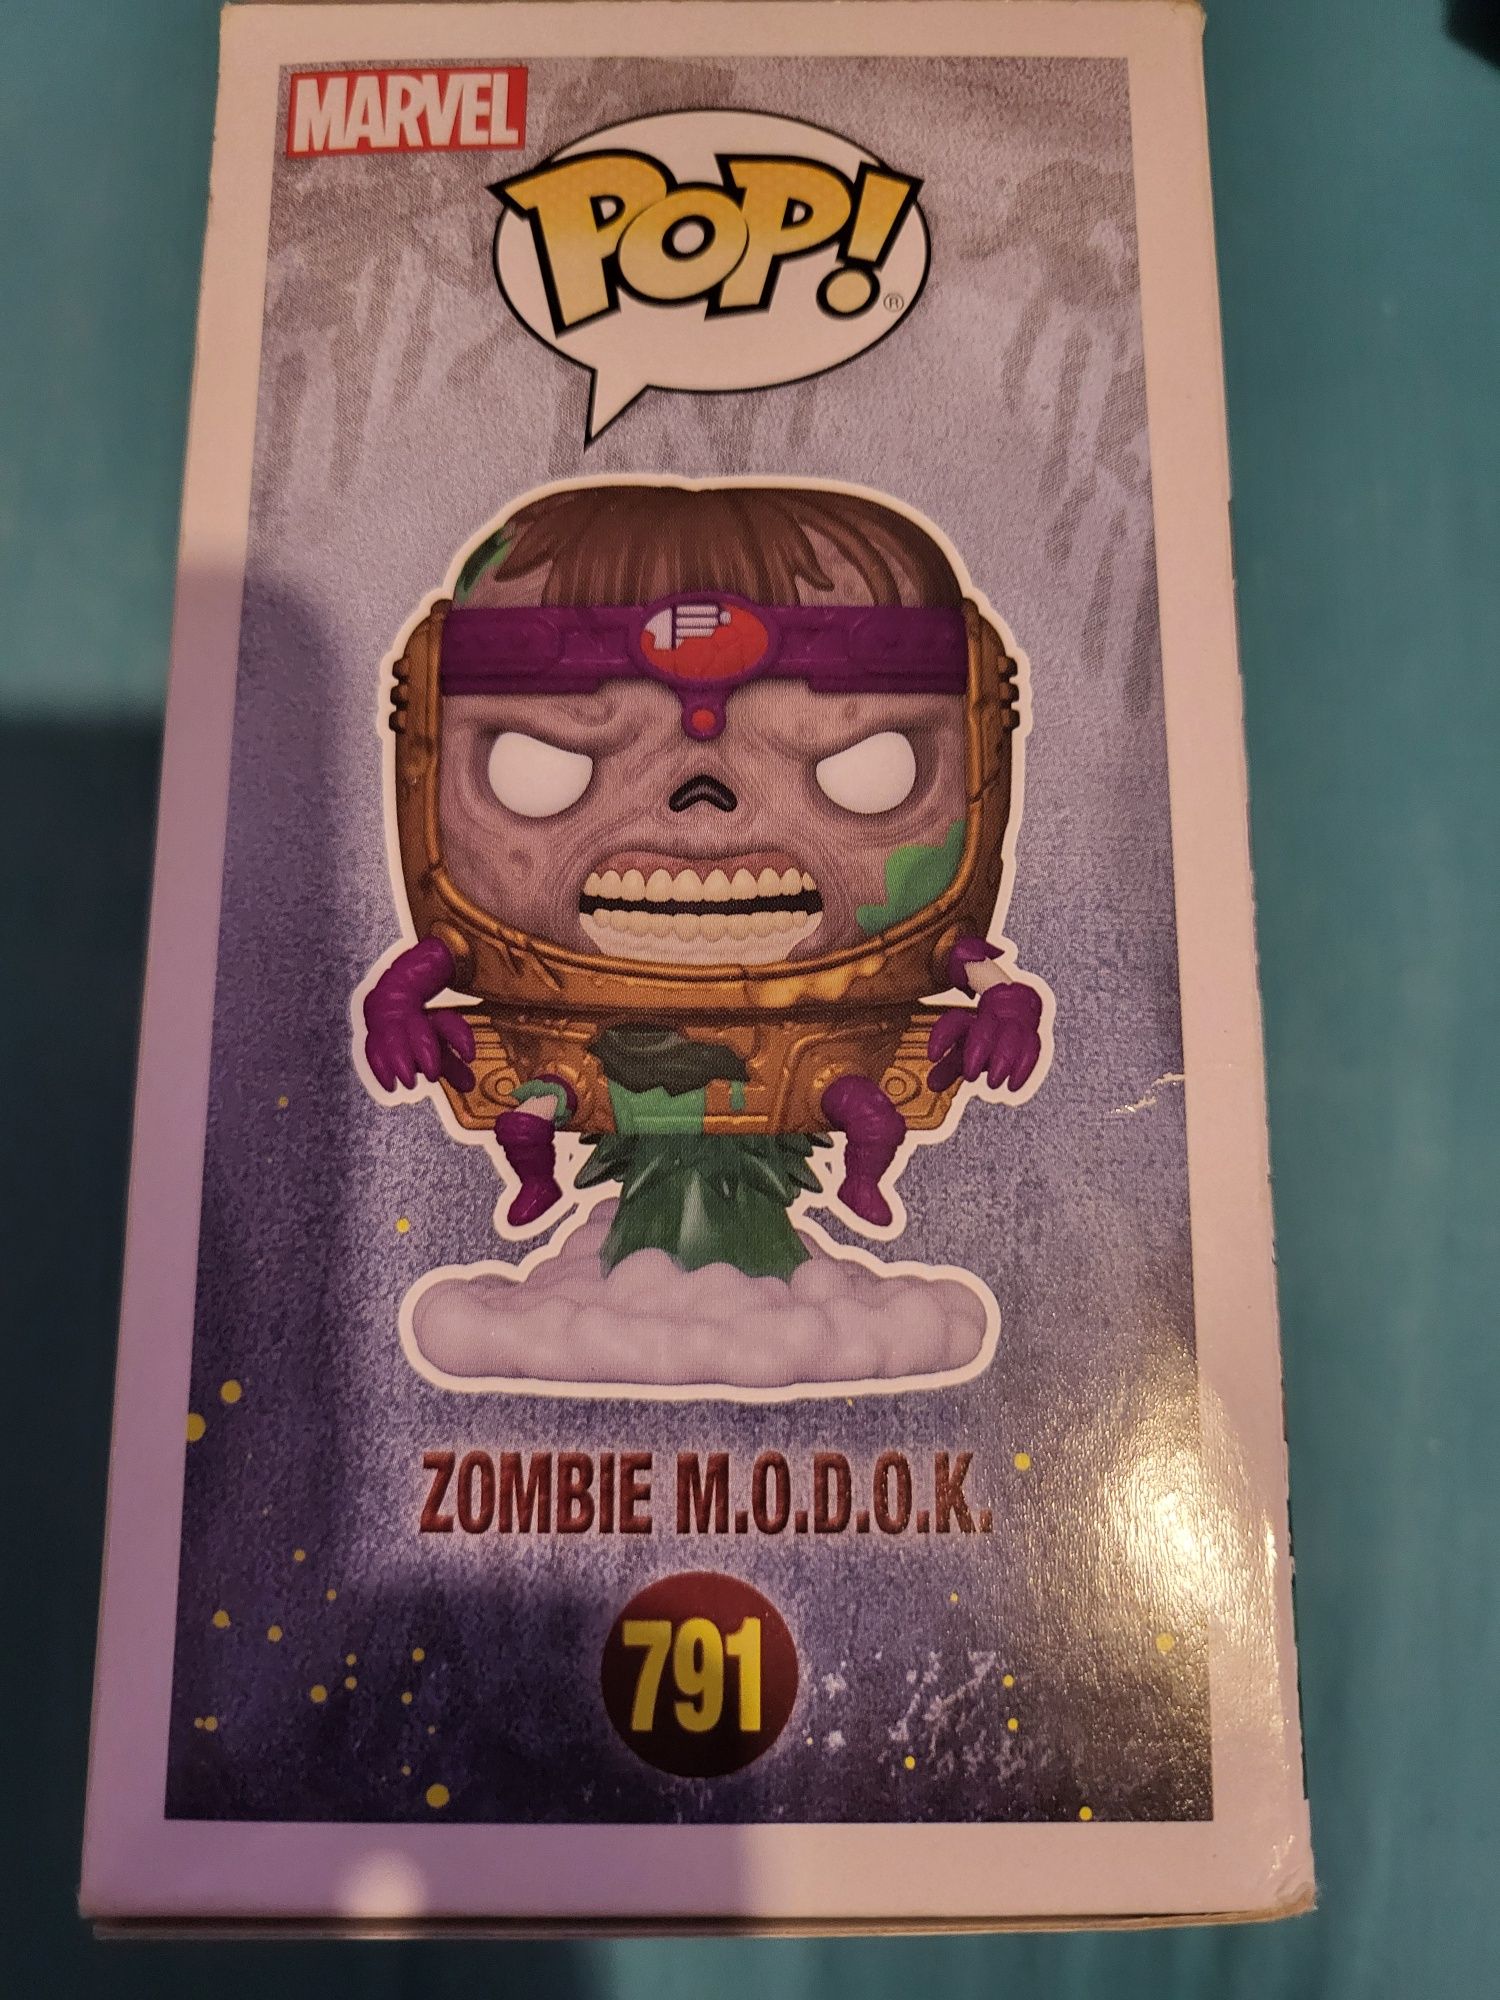 Funko pop Modok Zombie 791 Marvel Zombies bobble Head m.o.d.o.k